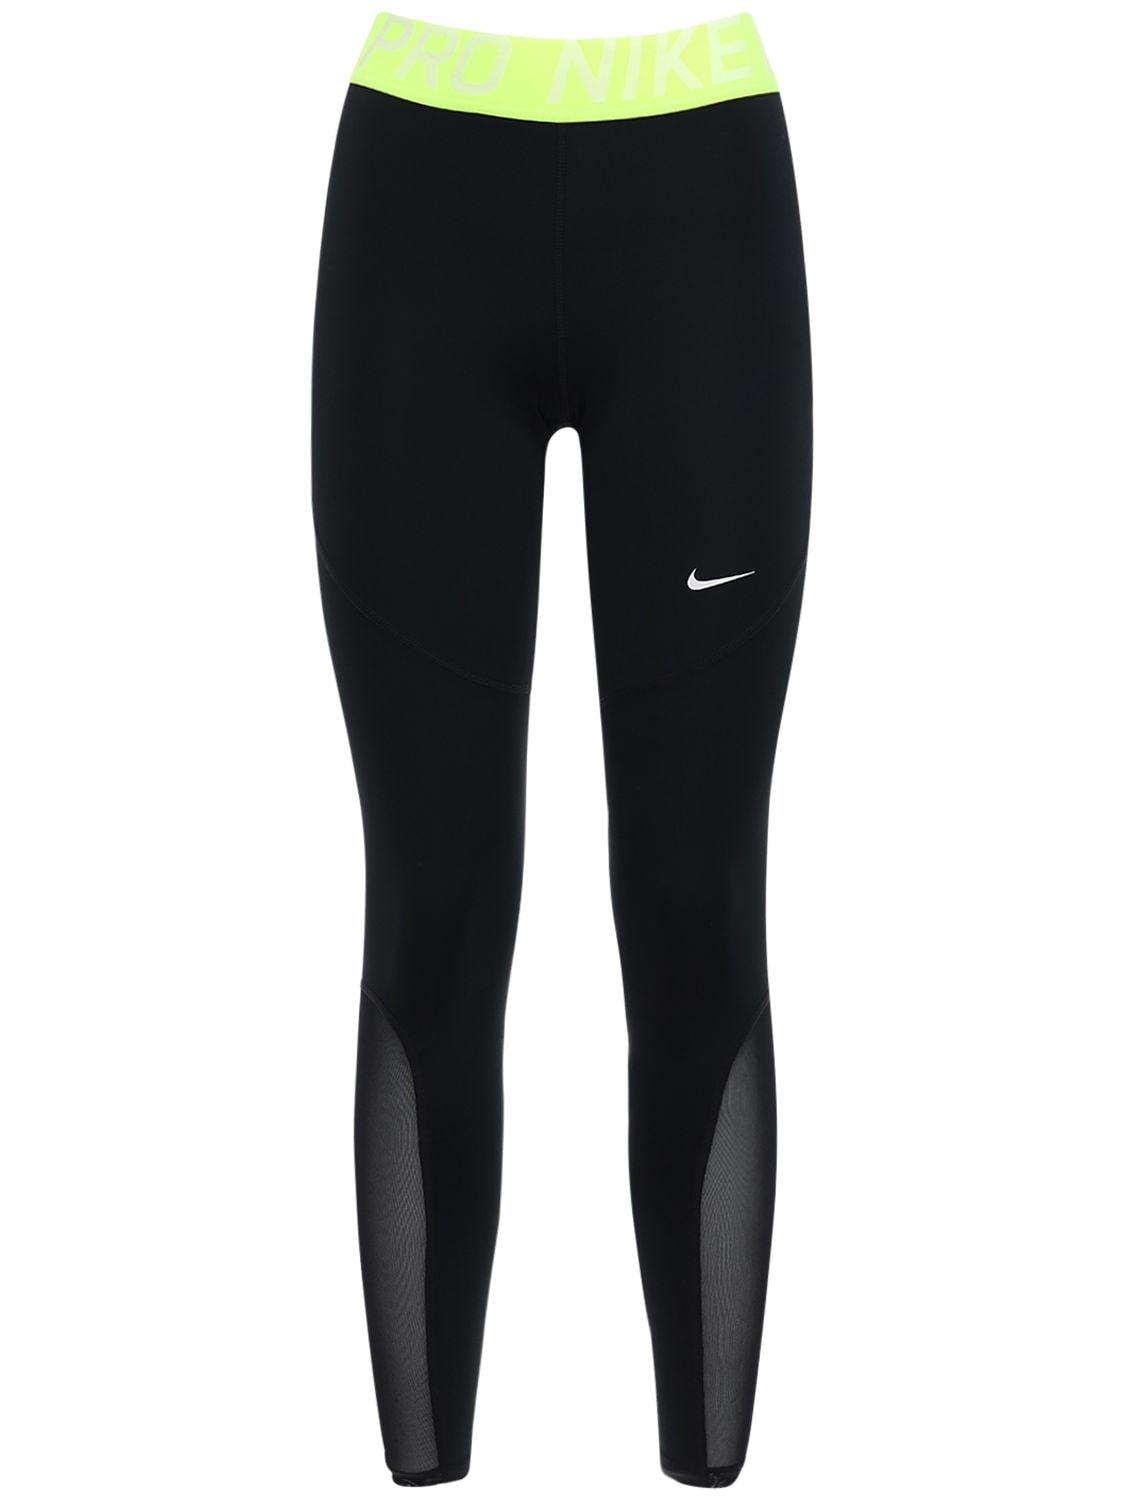 Nike Plus Training Pro leggings in black